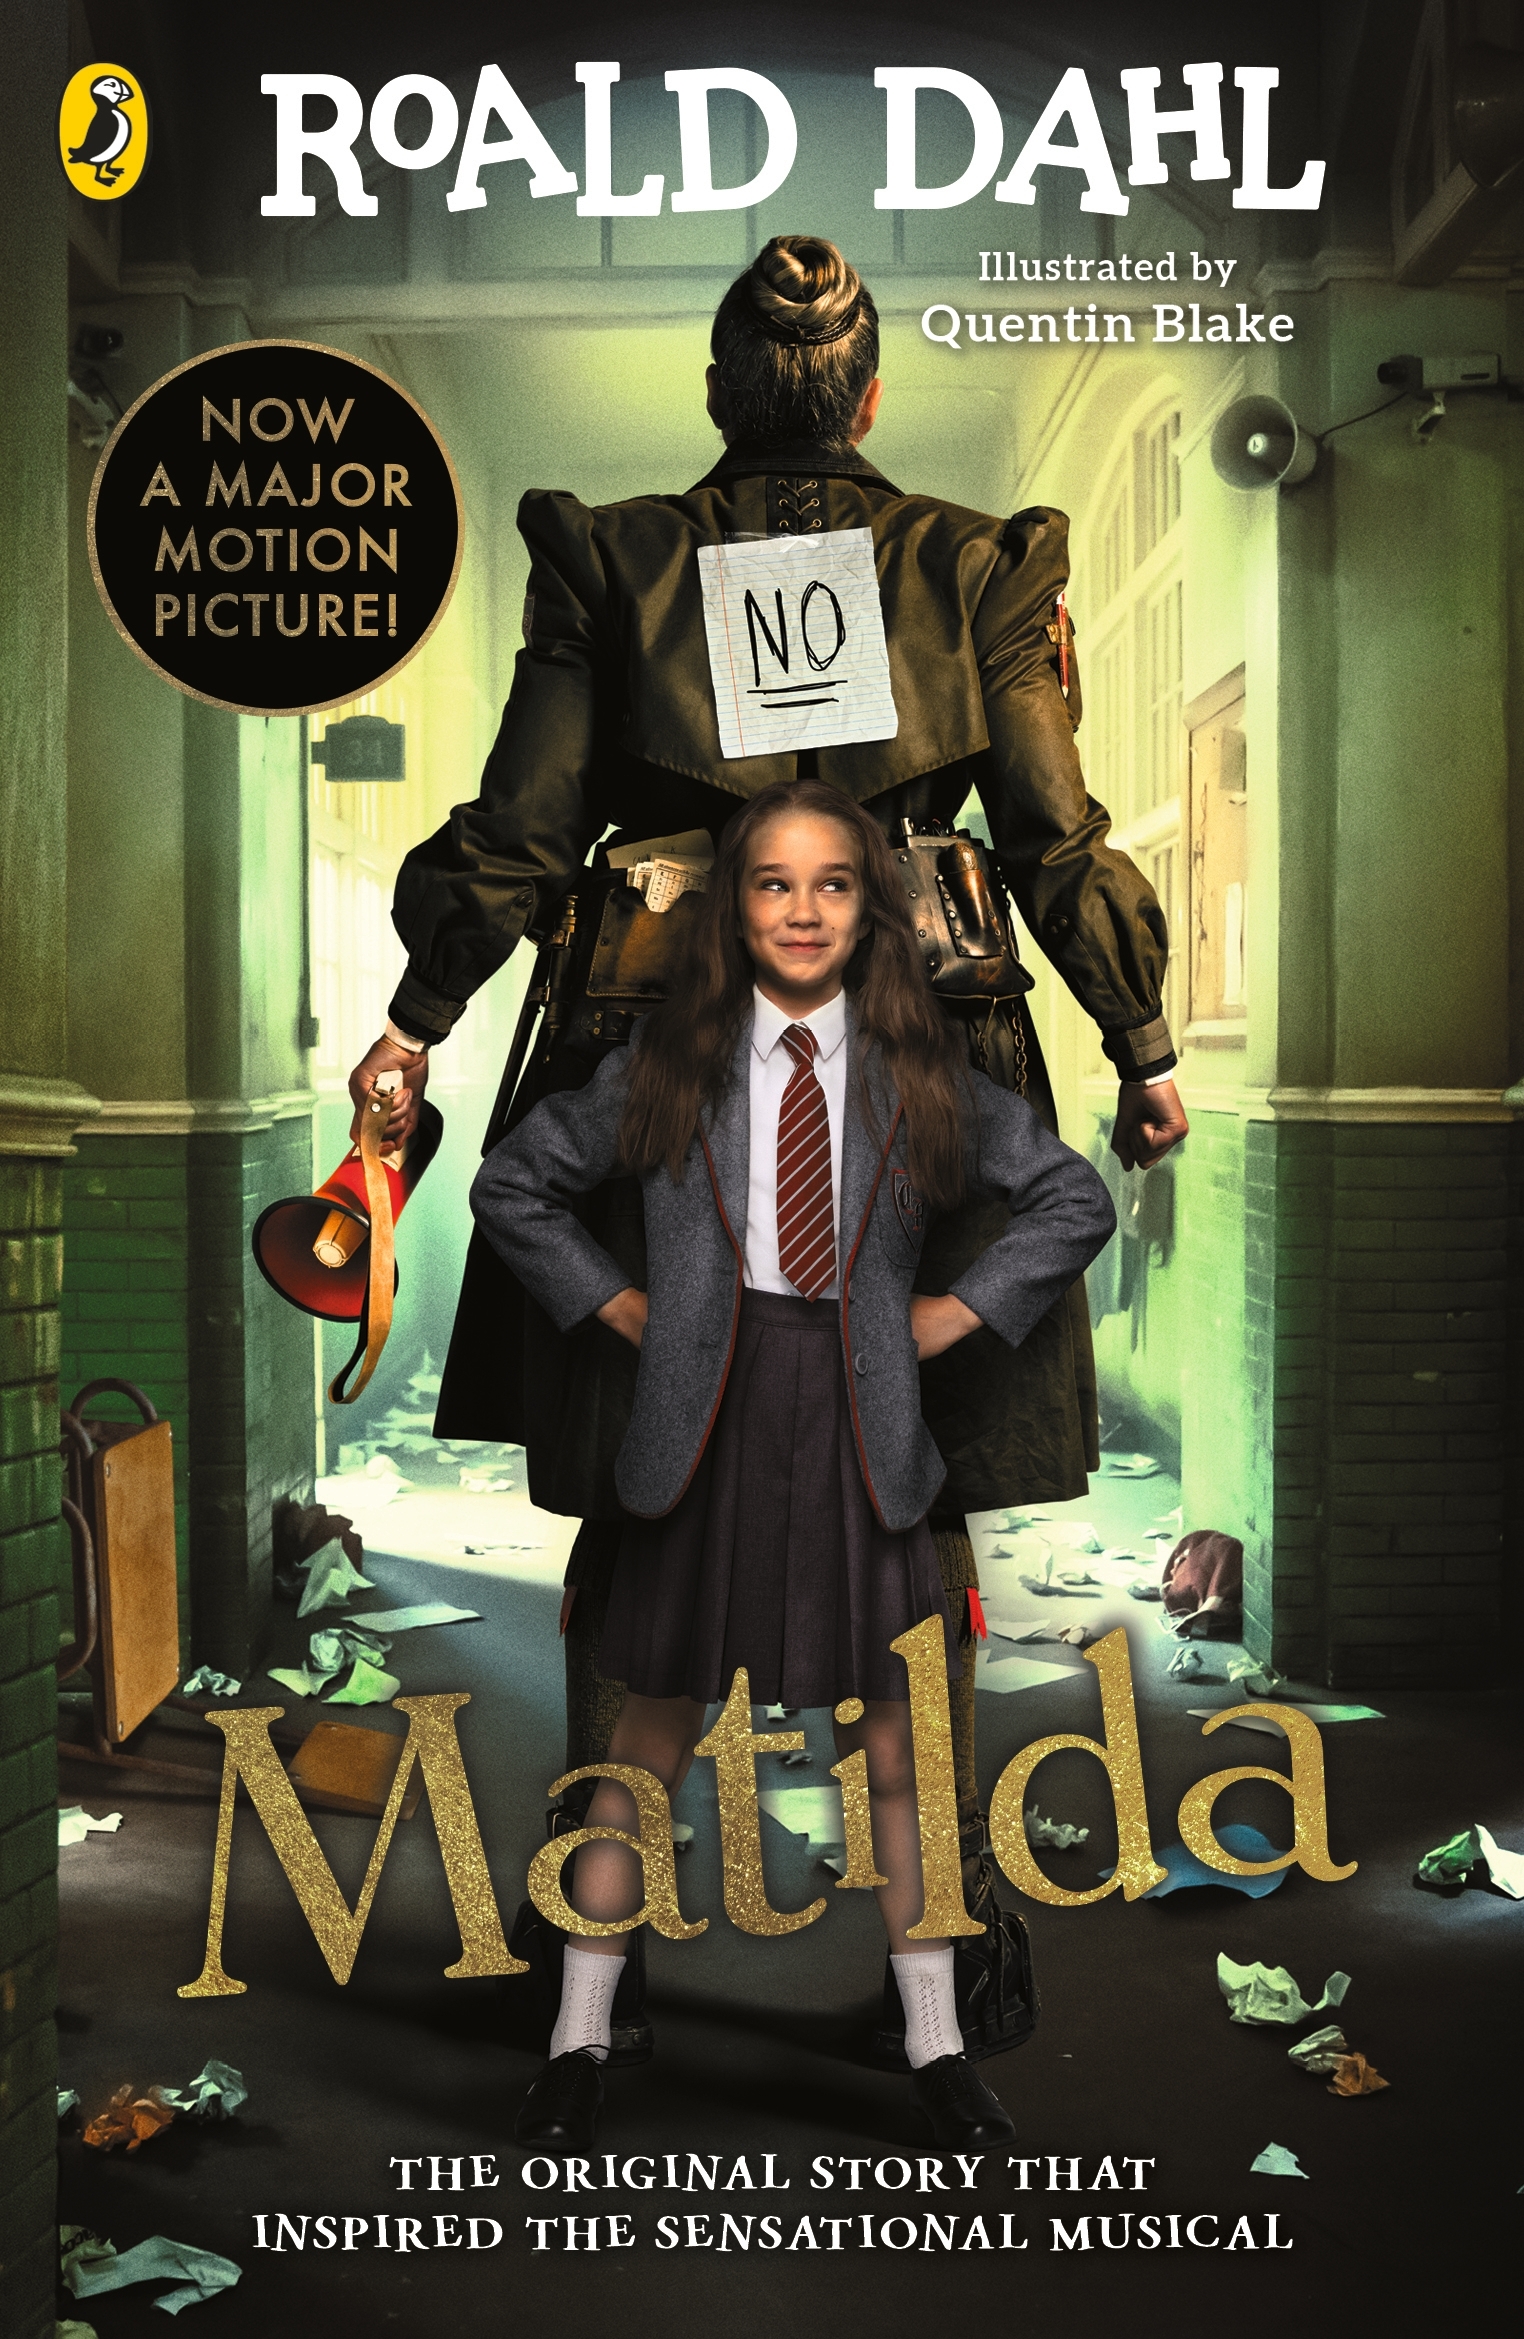 book review of matilda by roald dahl